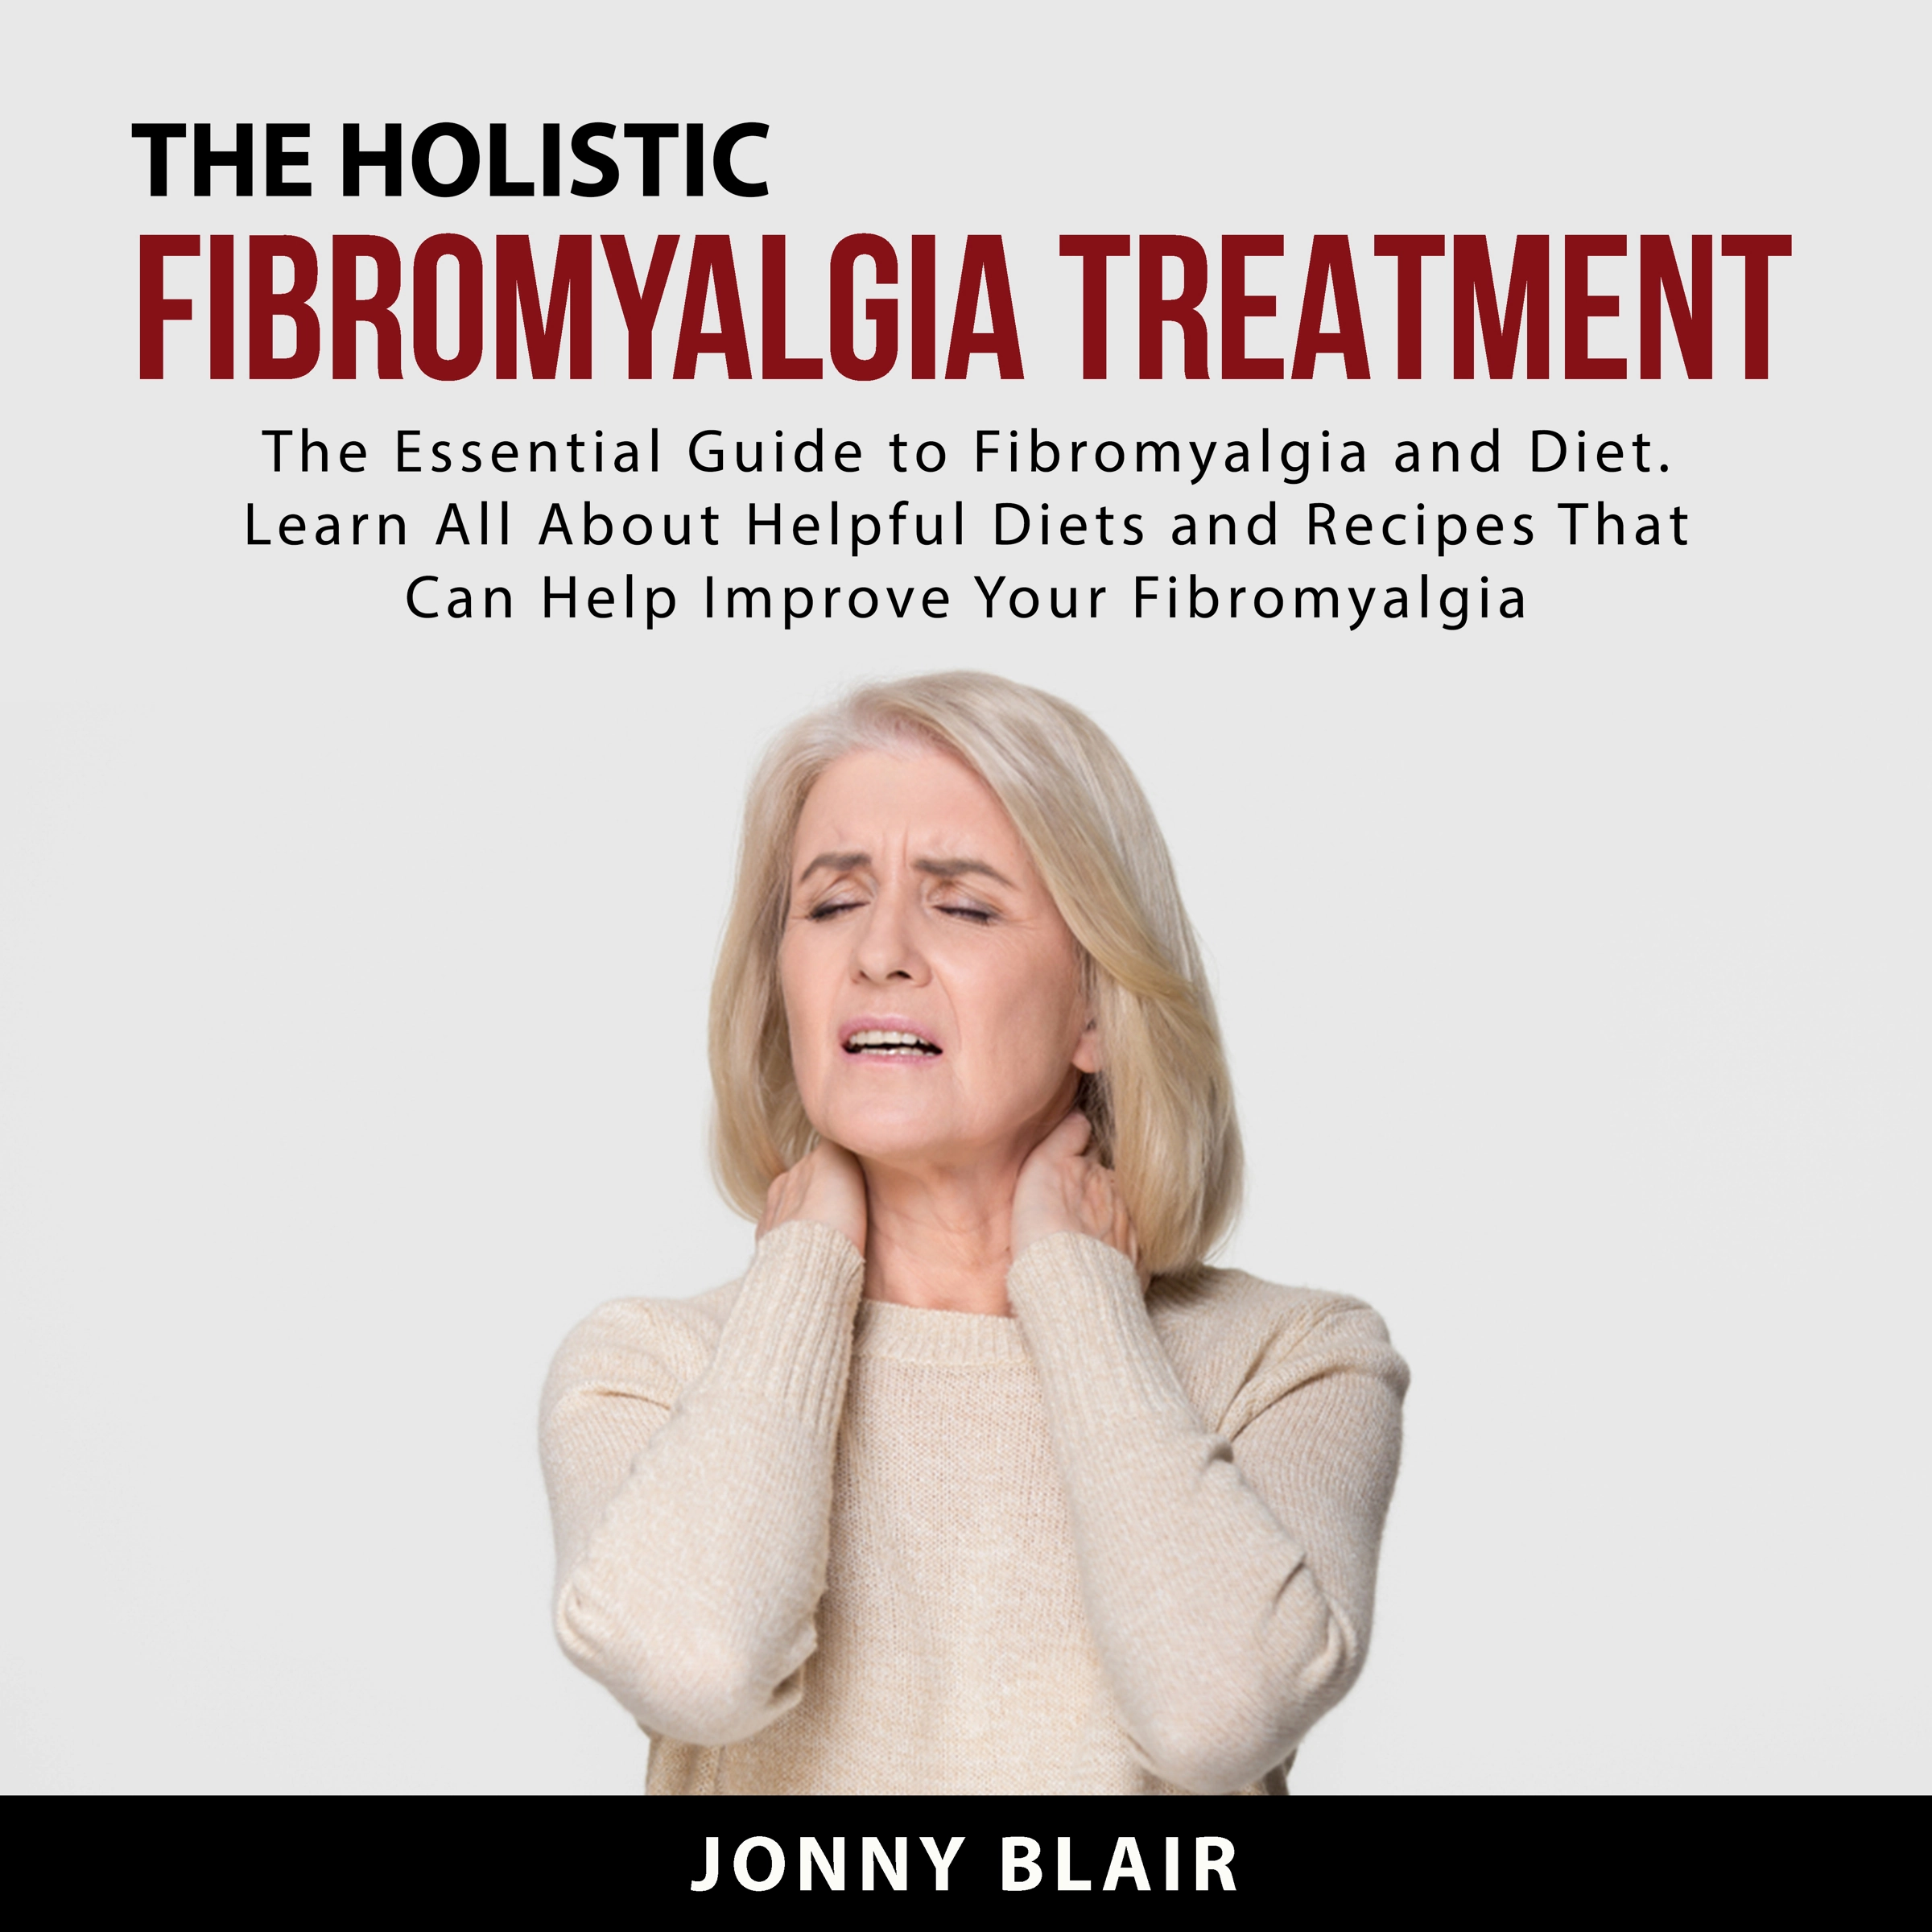 The Holistic Fibromyalgia Treatment Audiobook by Jonny Blair